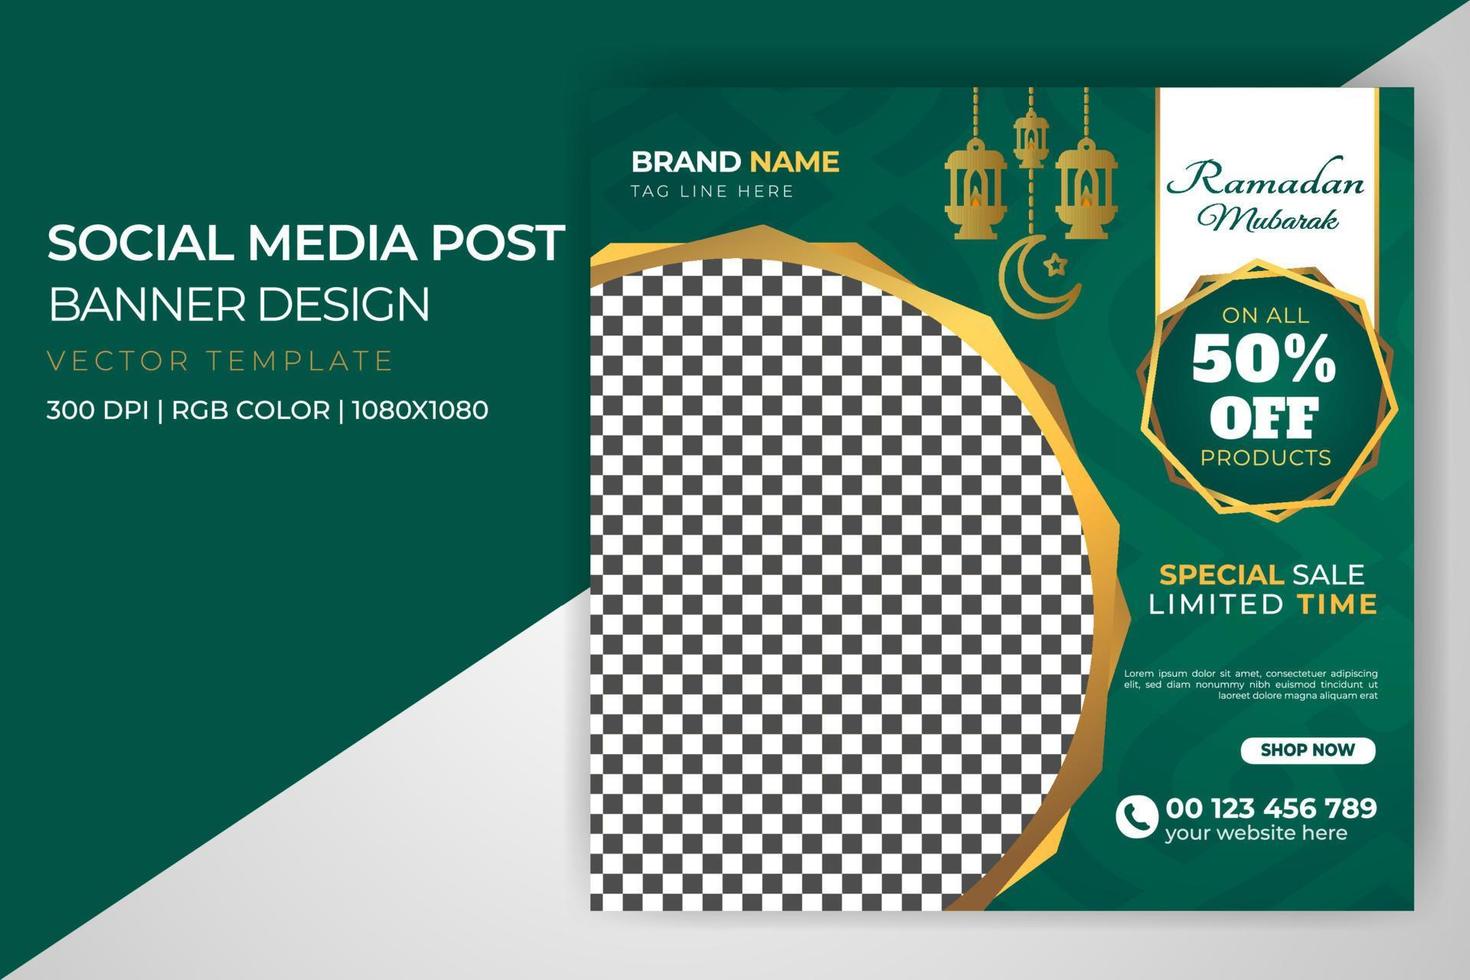 Eid Mubarak Ramadan Eid Ul Fitr Eid Ul Adha Social Media Post Wish Muslim Sales Discount Banner Design Template Free Download vector